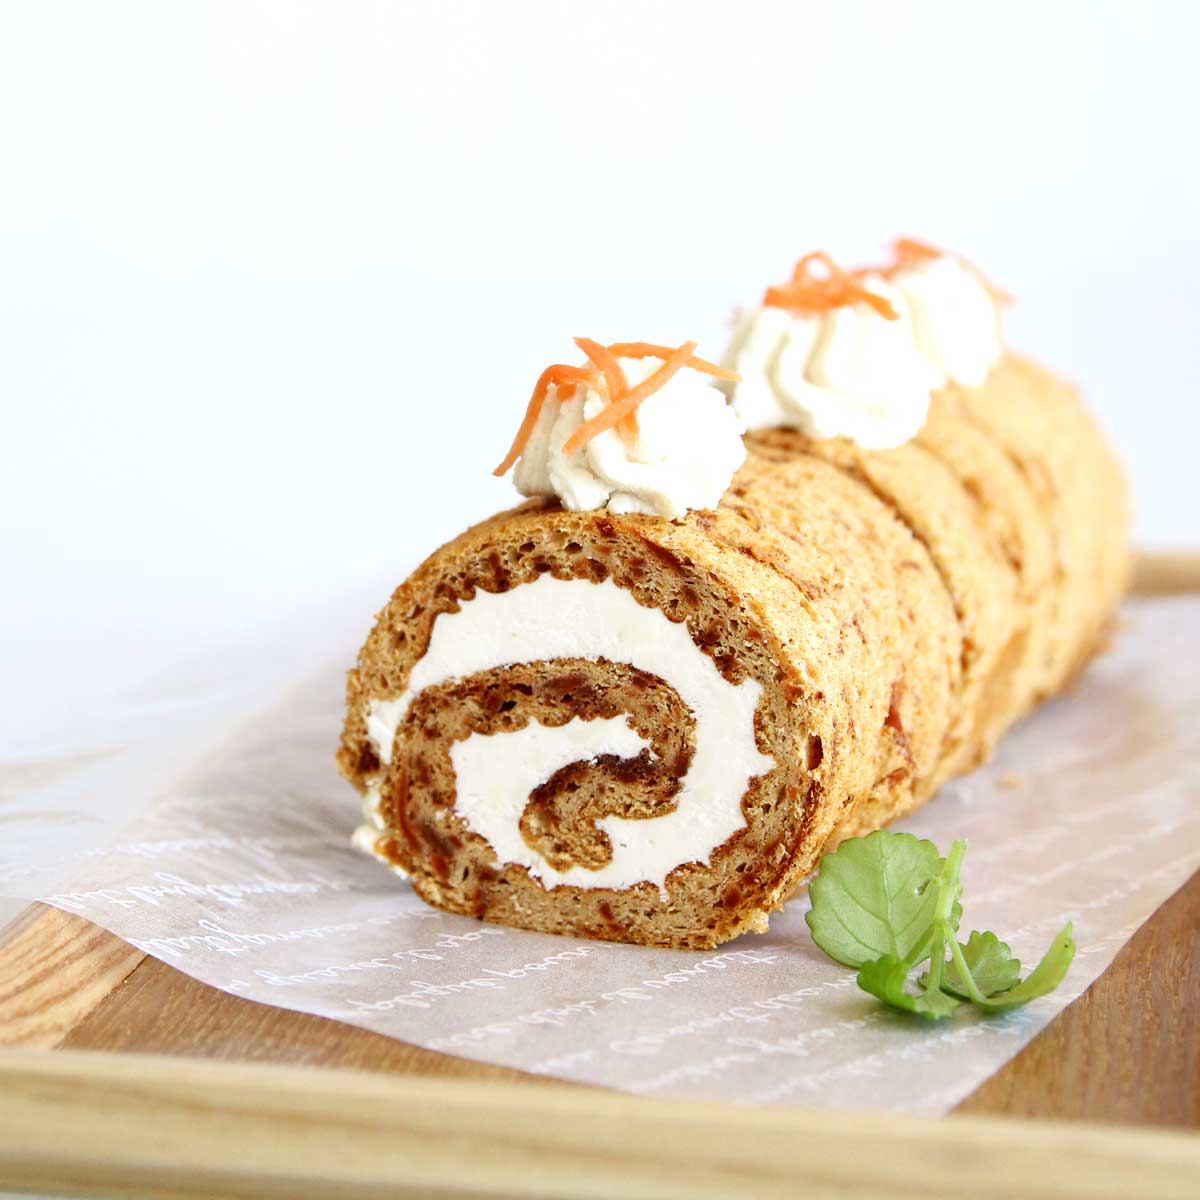 carrot cake cream cheese filling - gluten free flourless swiss roll cake